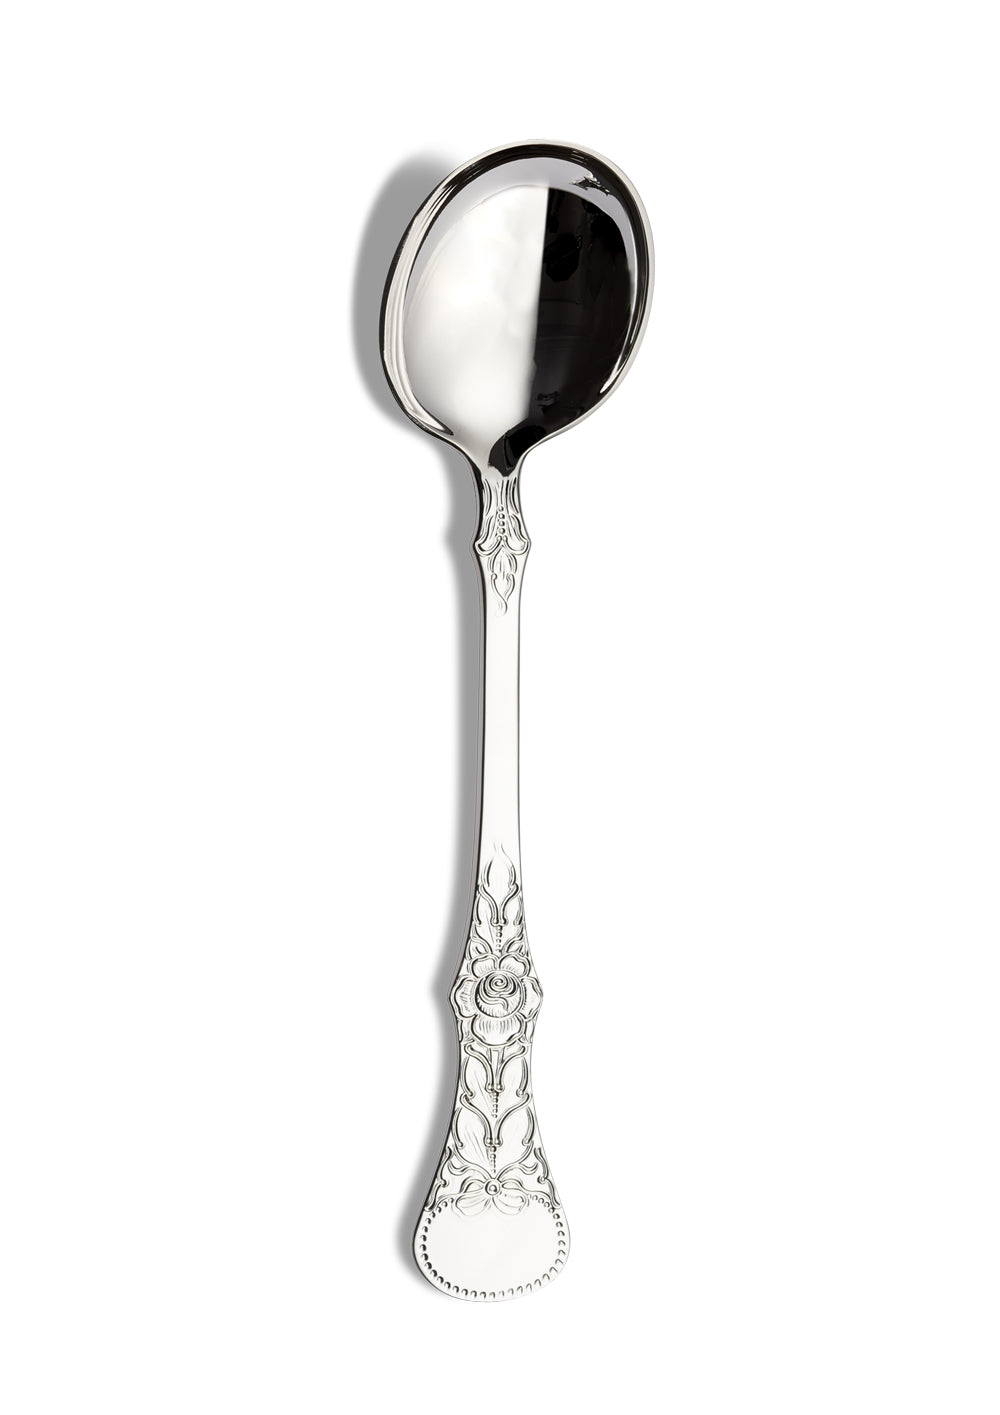 Rose serving spoon